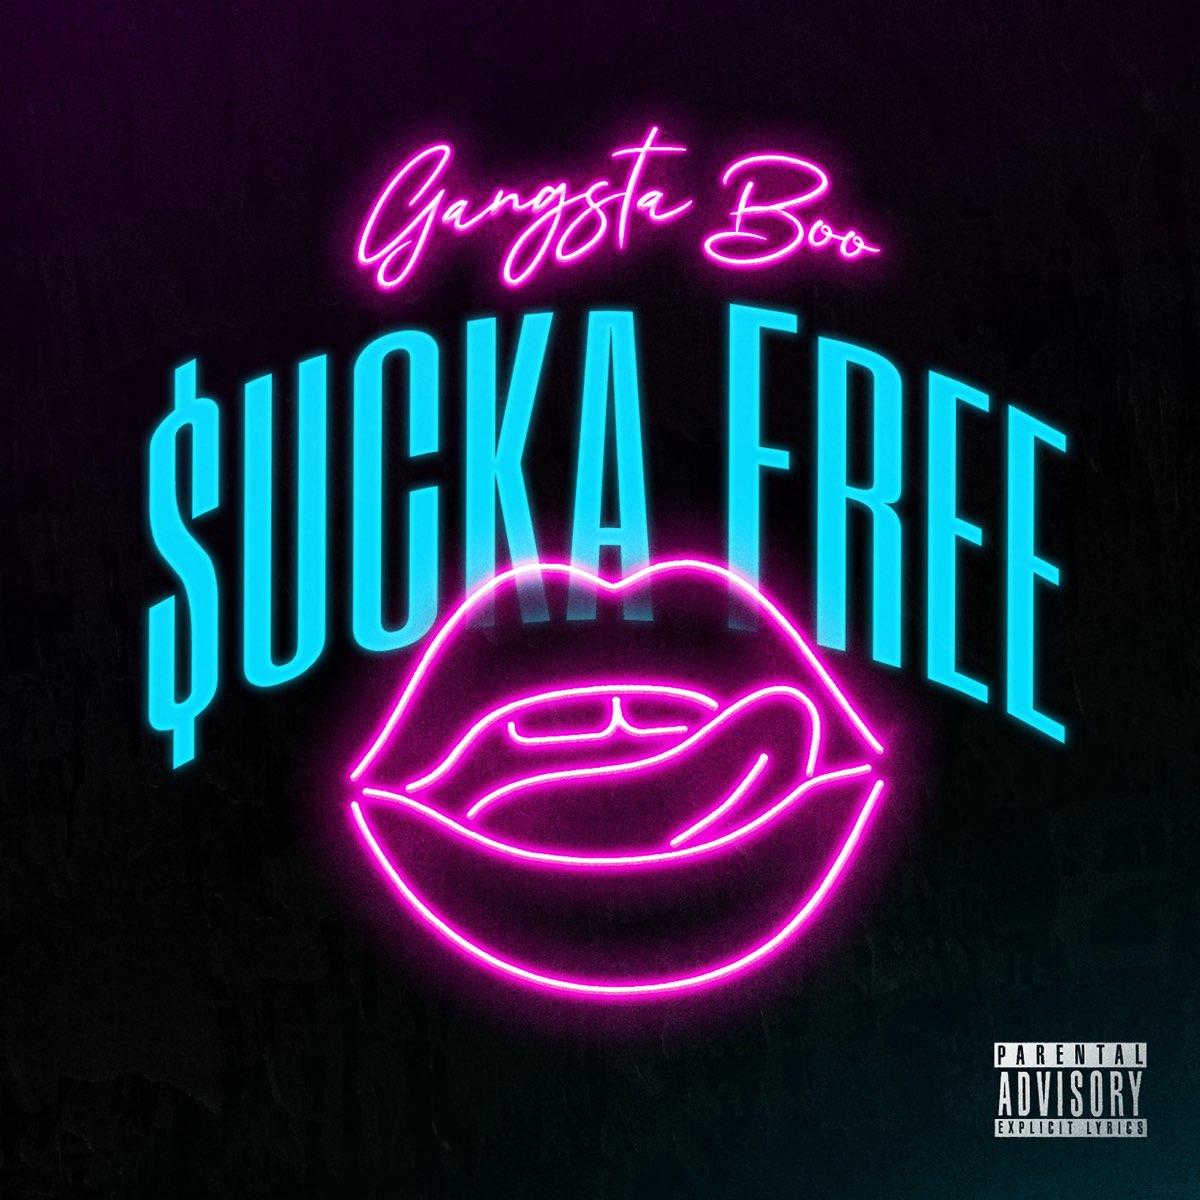 Sucka Free - Single by Gangsta Boo on Apple Music